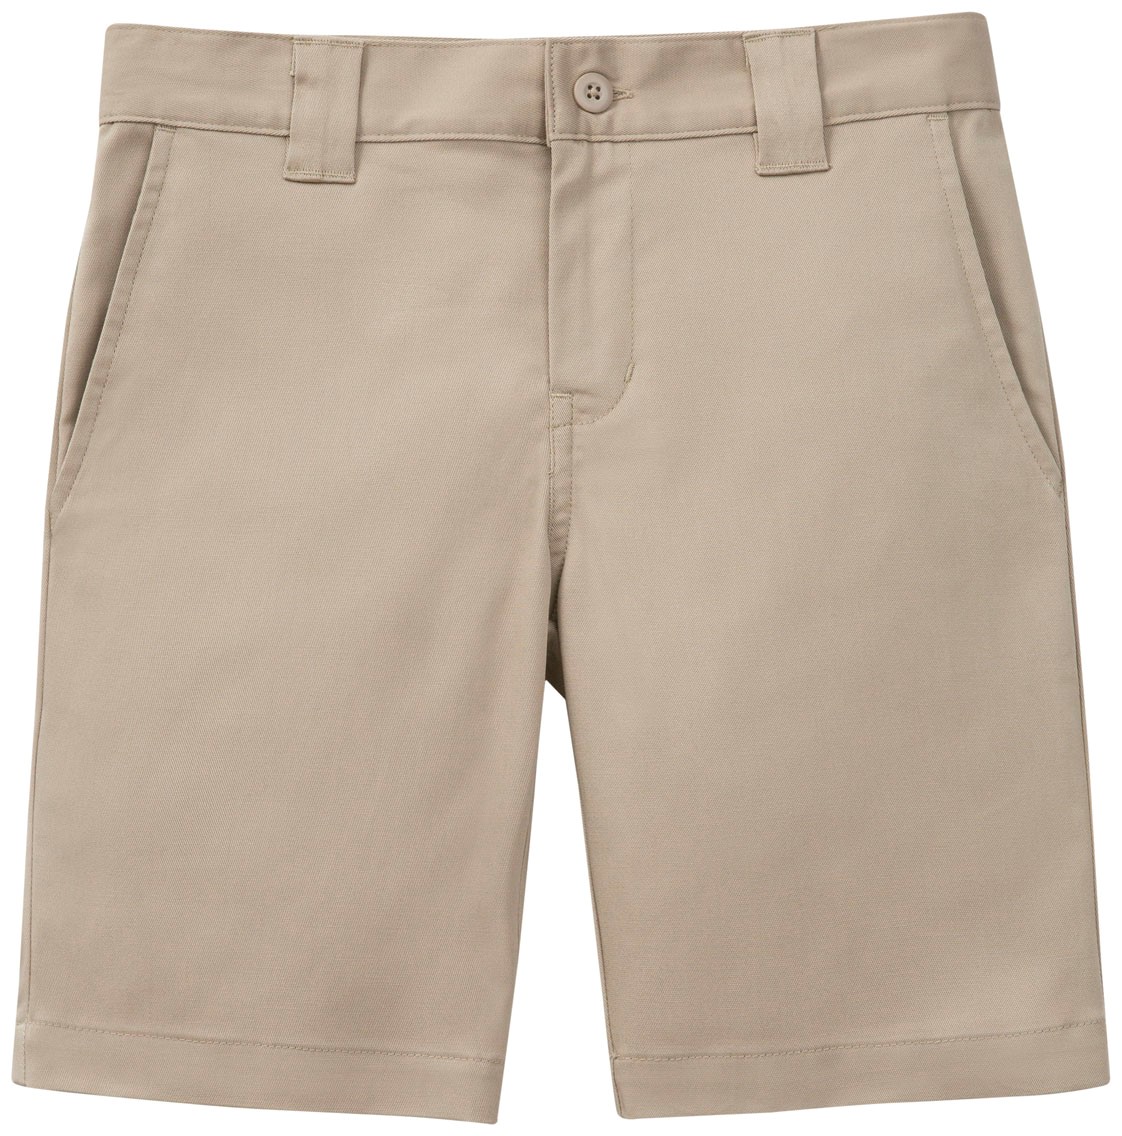 ESA-Men's flat front khaki shorts.